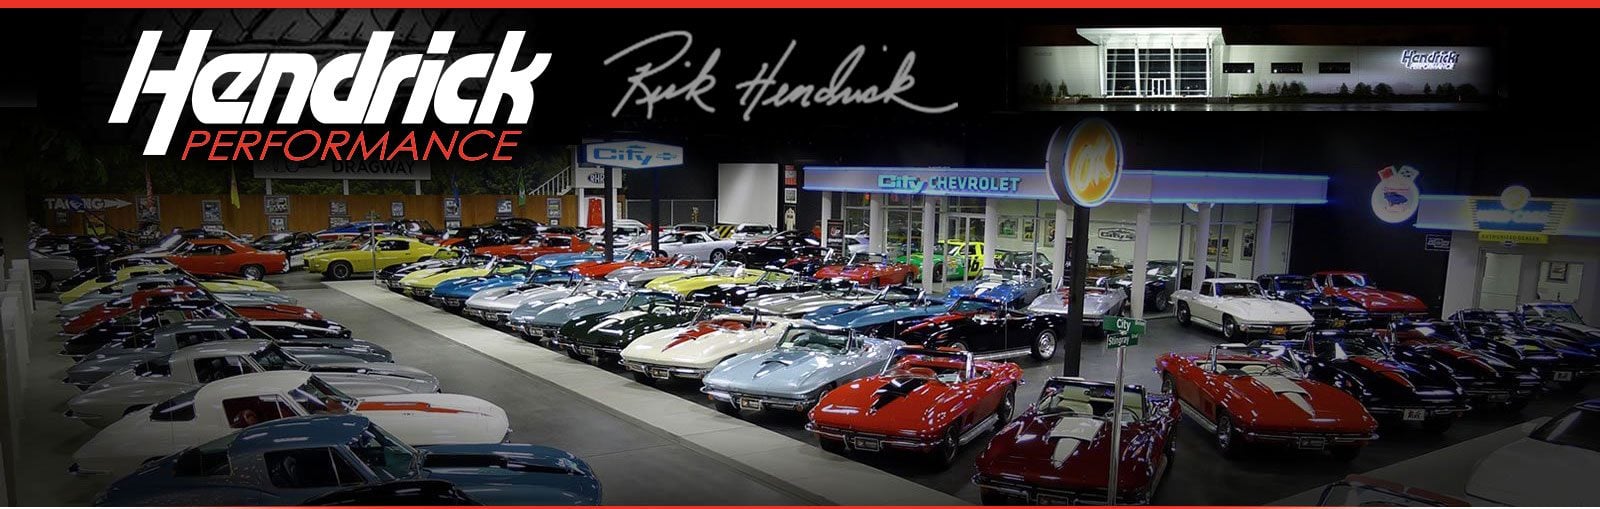 Hendrick Performance car collection